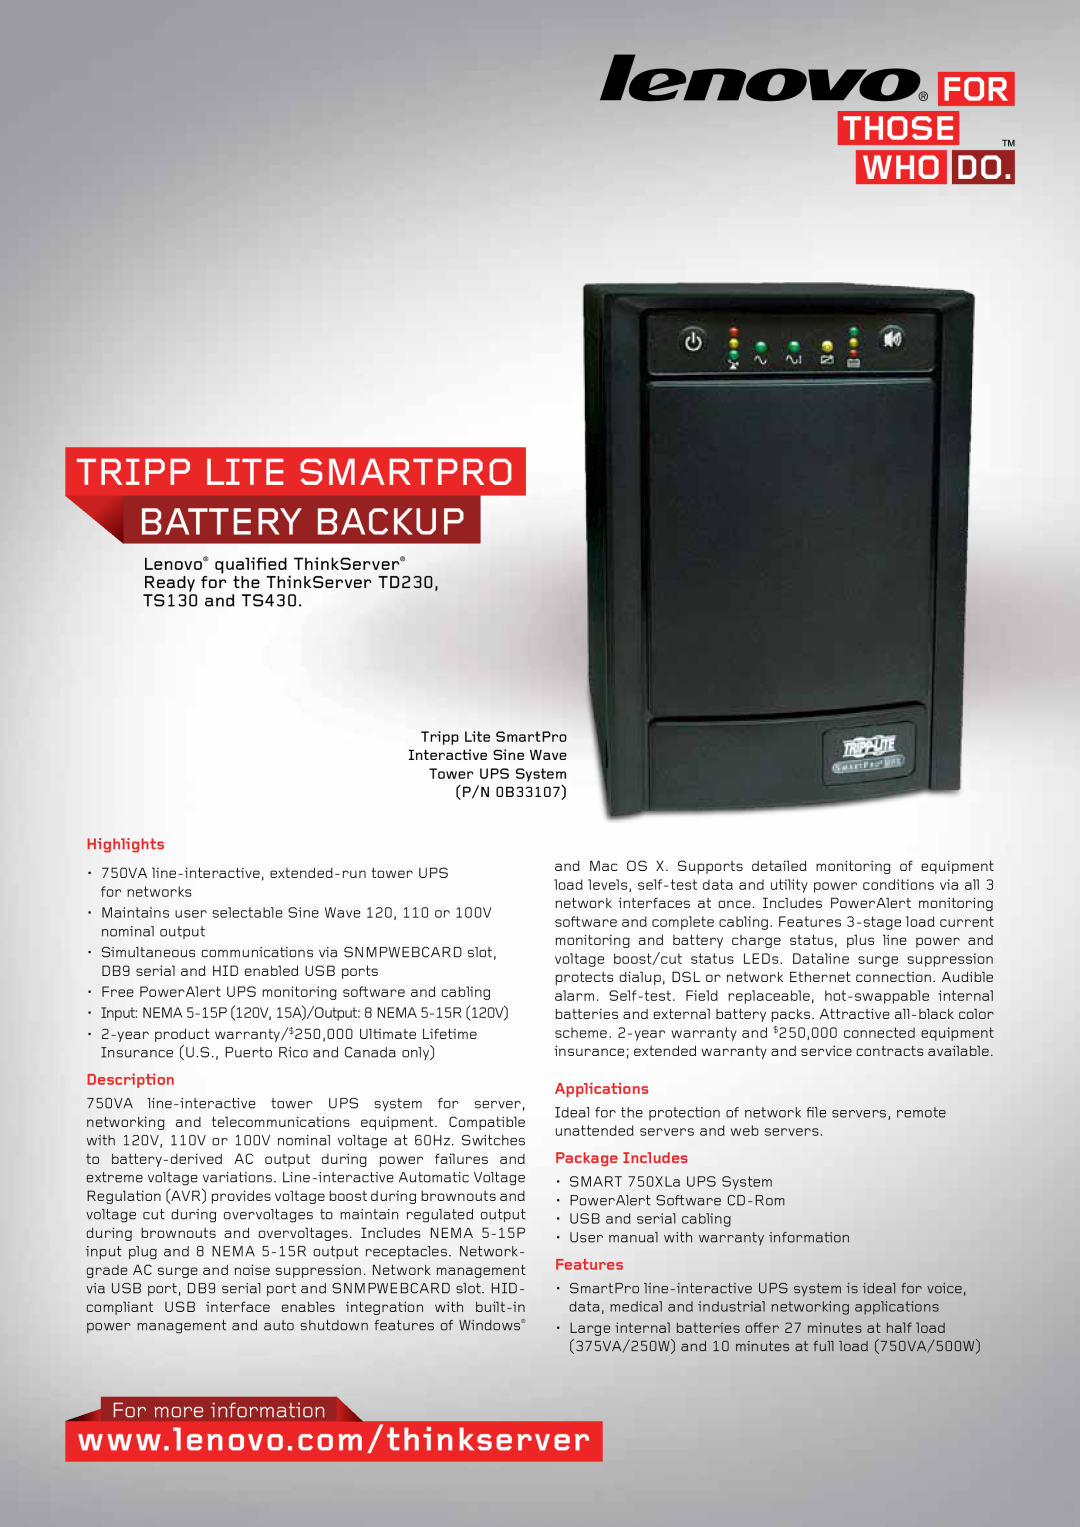 Lenovo TS430 warranty For more information, Tripp Lite Smartpro Battery Backup, Highlights, Description, Applications 